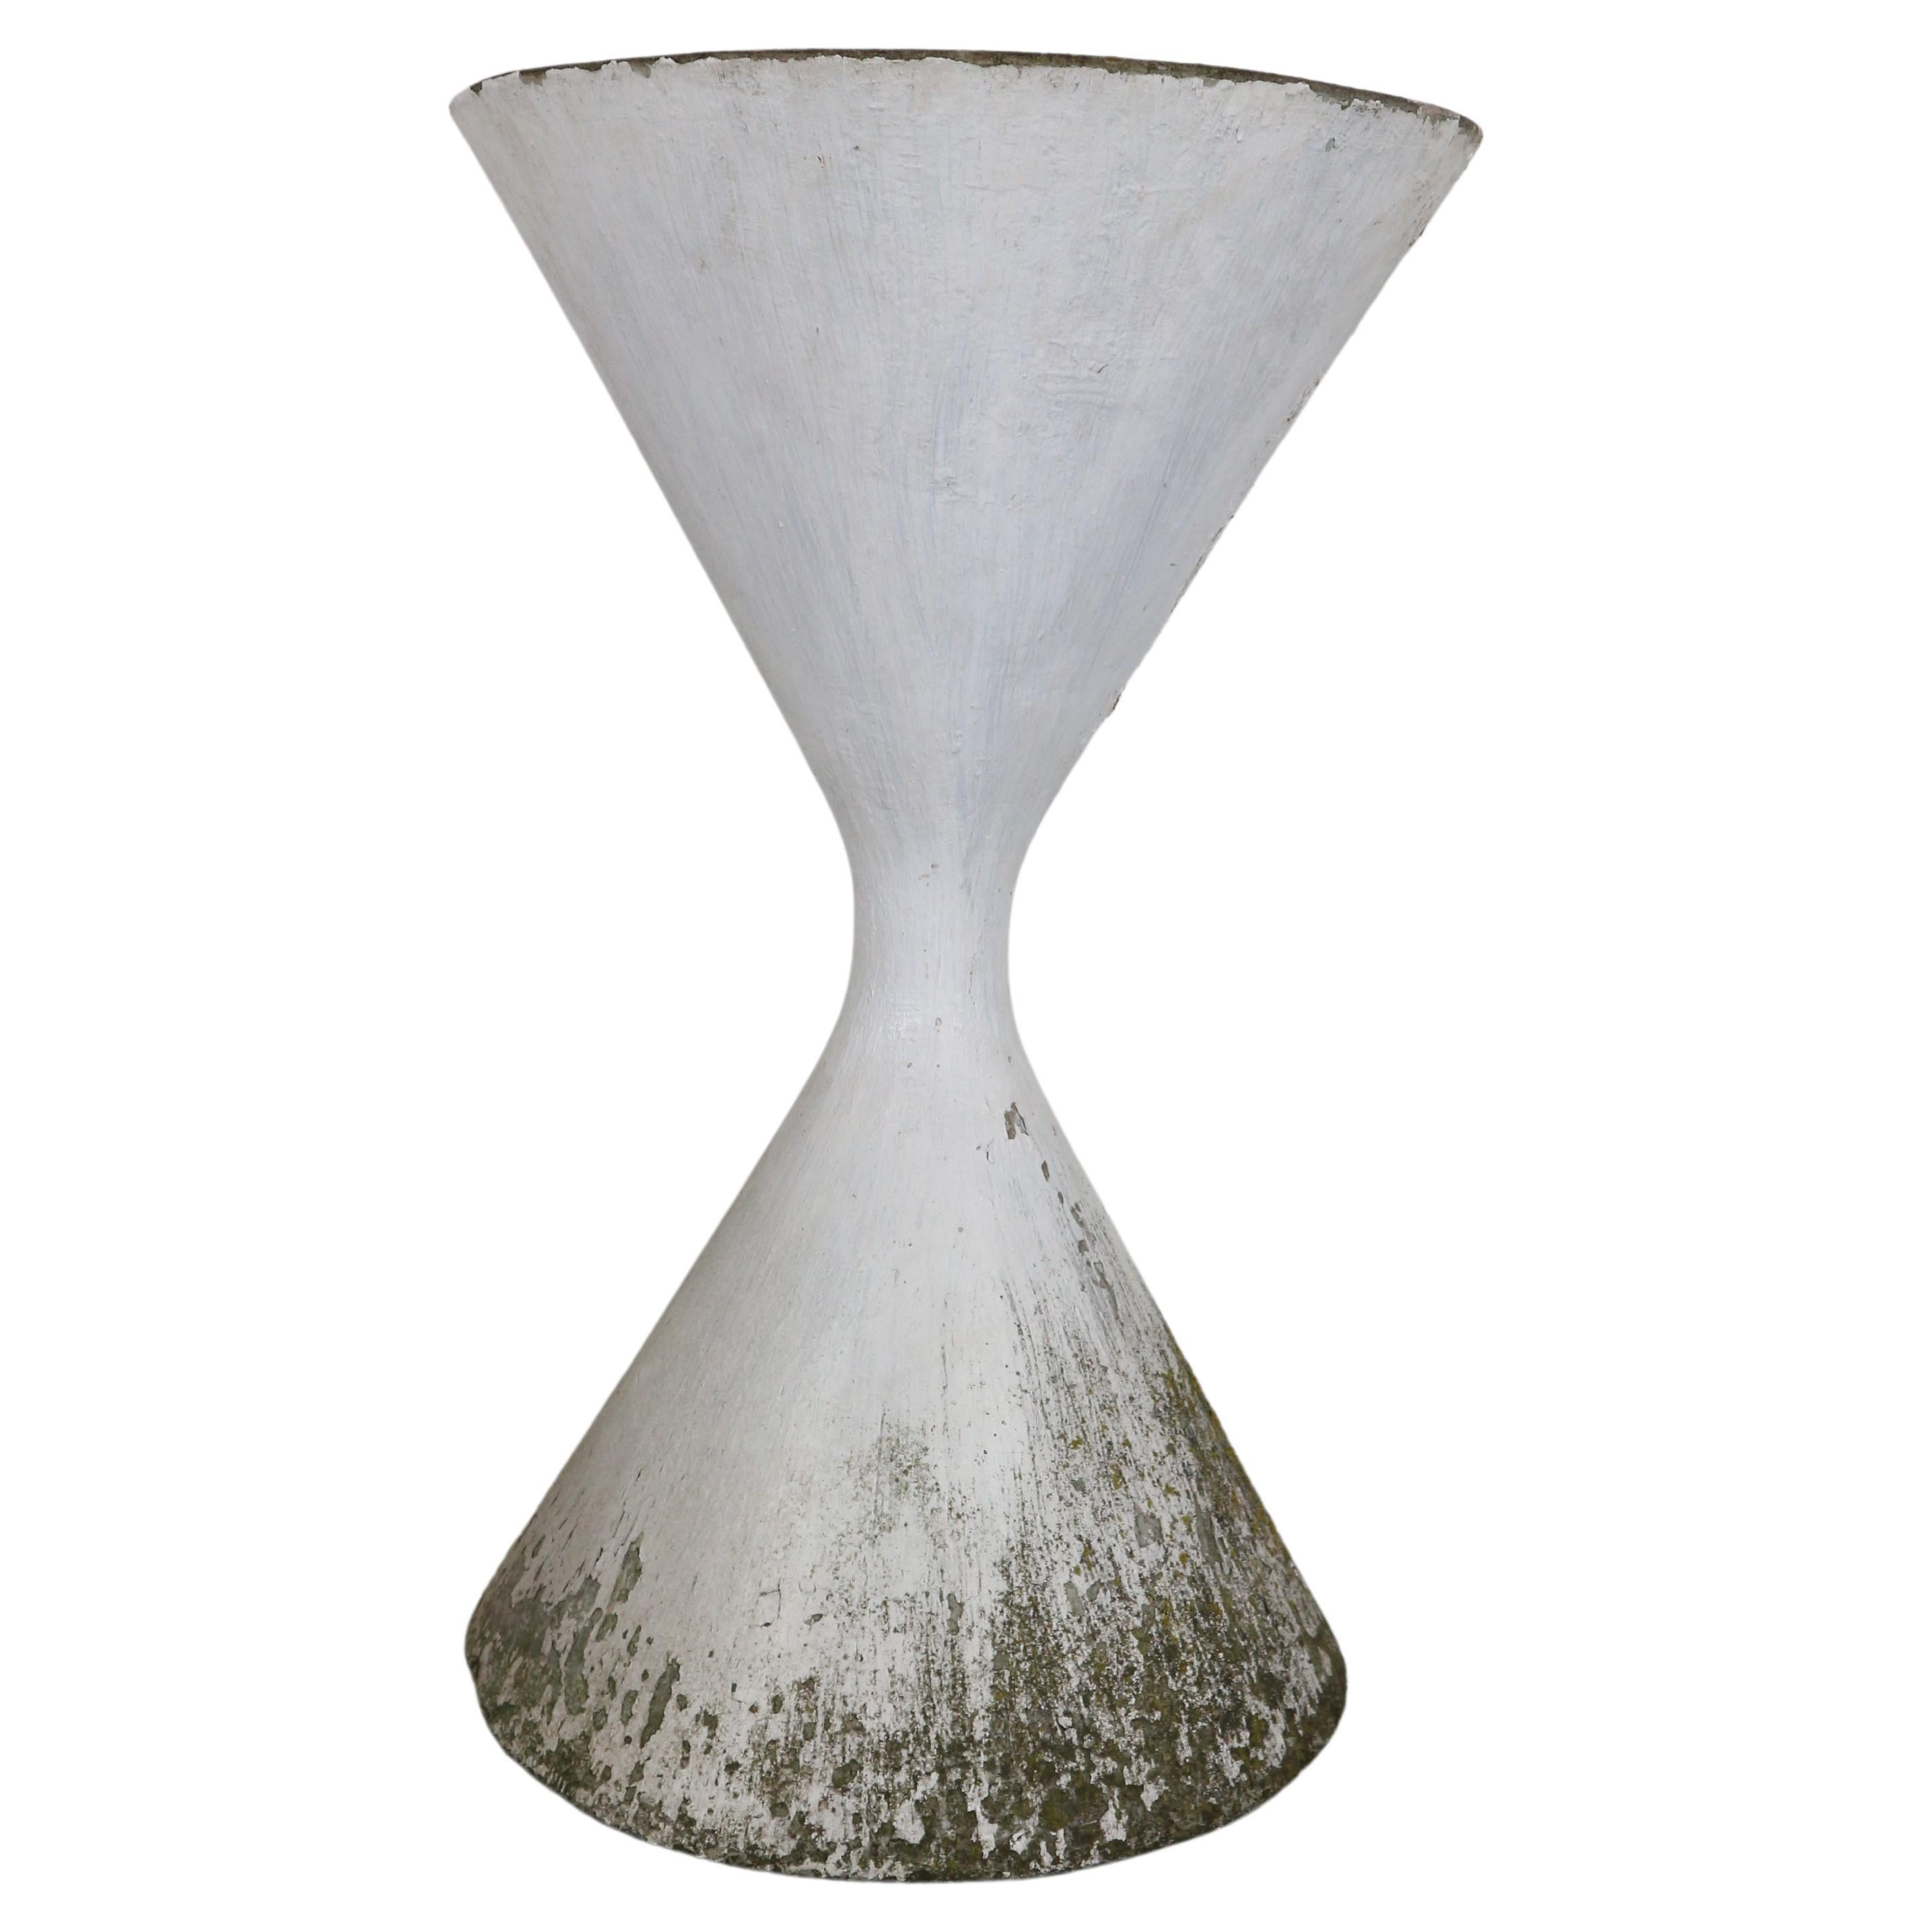 Willy Guhl 'Diablo' Spindel Hourglass Concrete Planter, Switzerland, 1954 For Sale